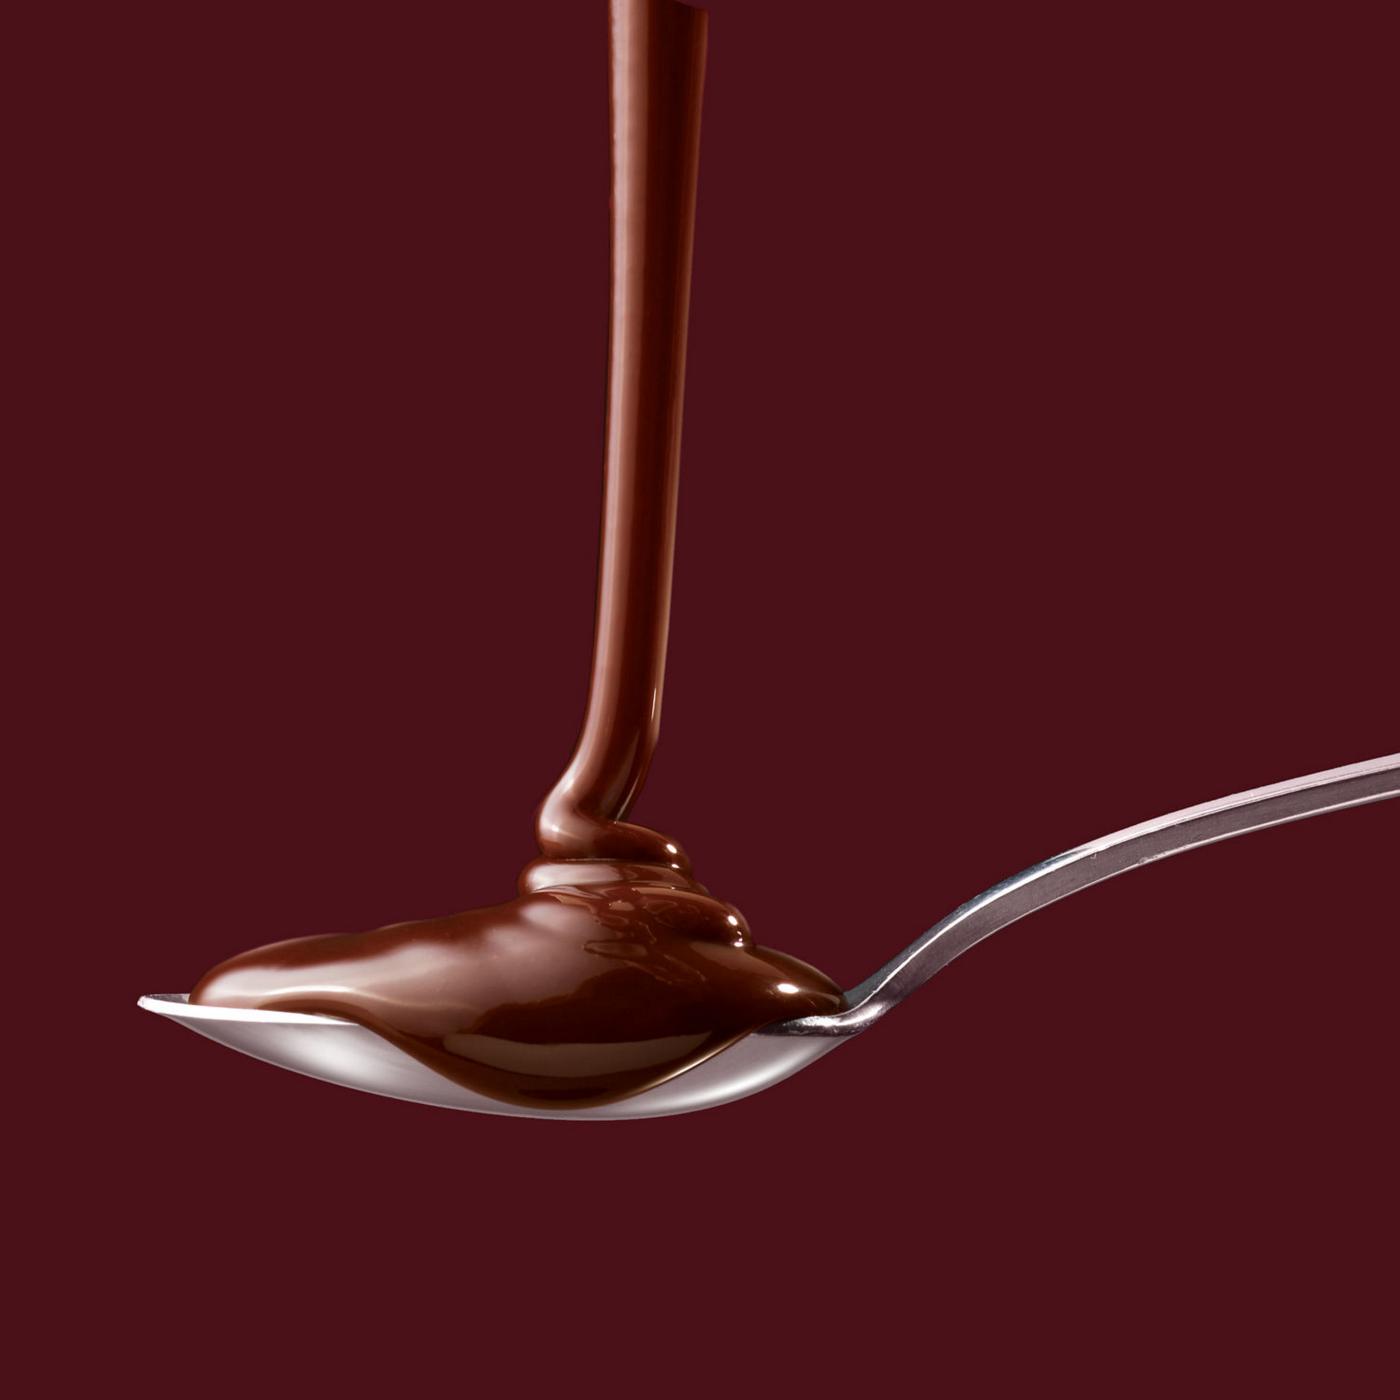 Hershey's Chocolate Syrup Bottle; image 2 of 7